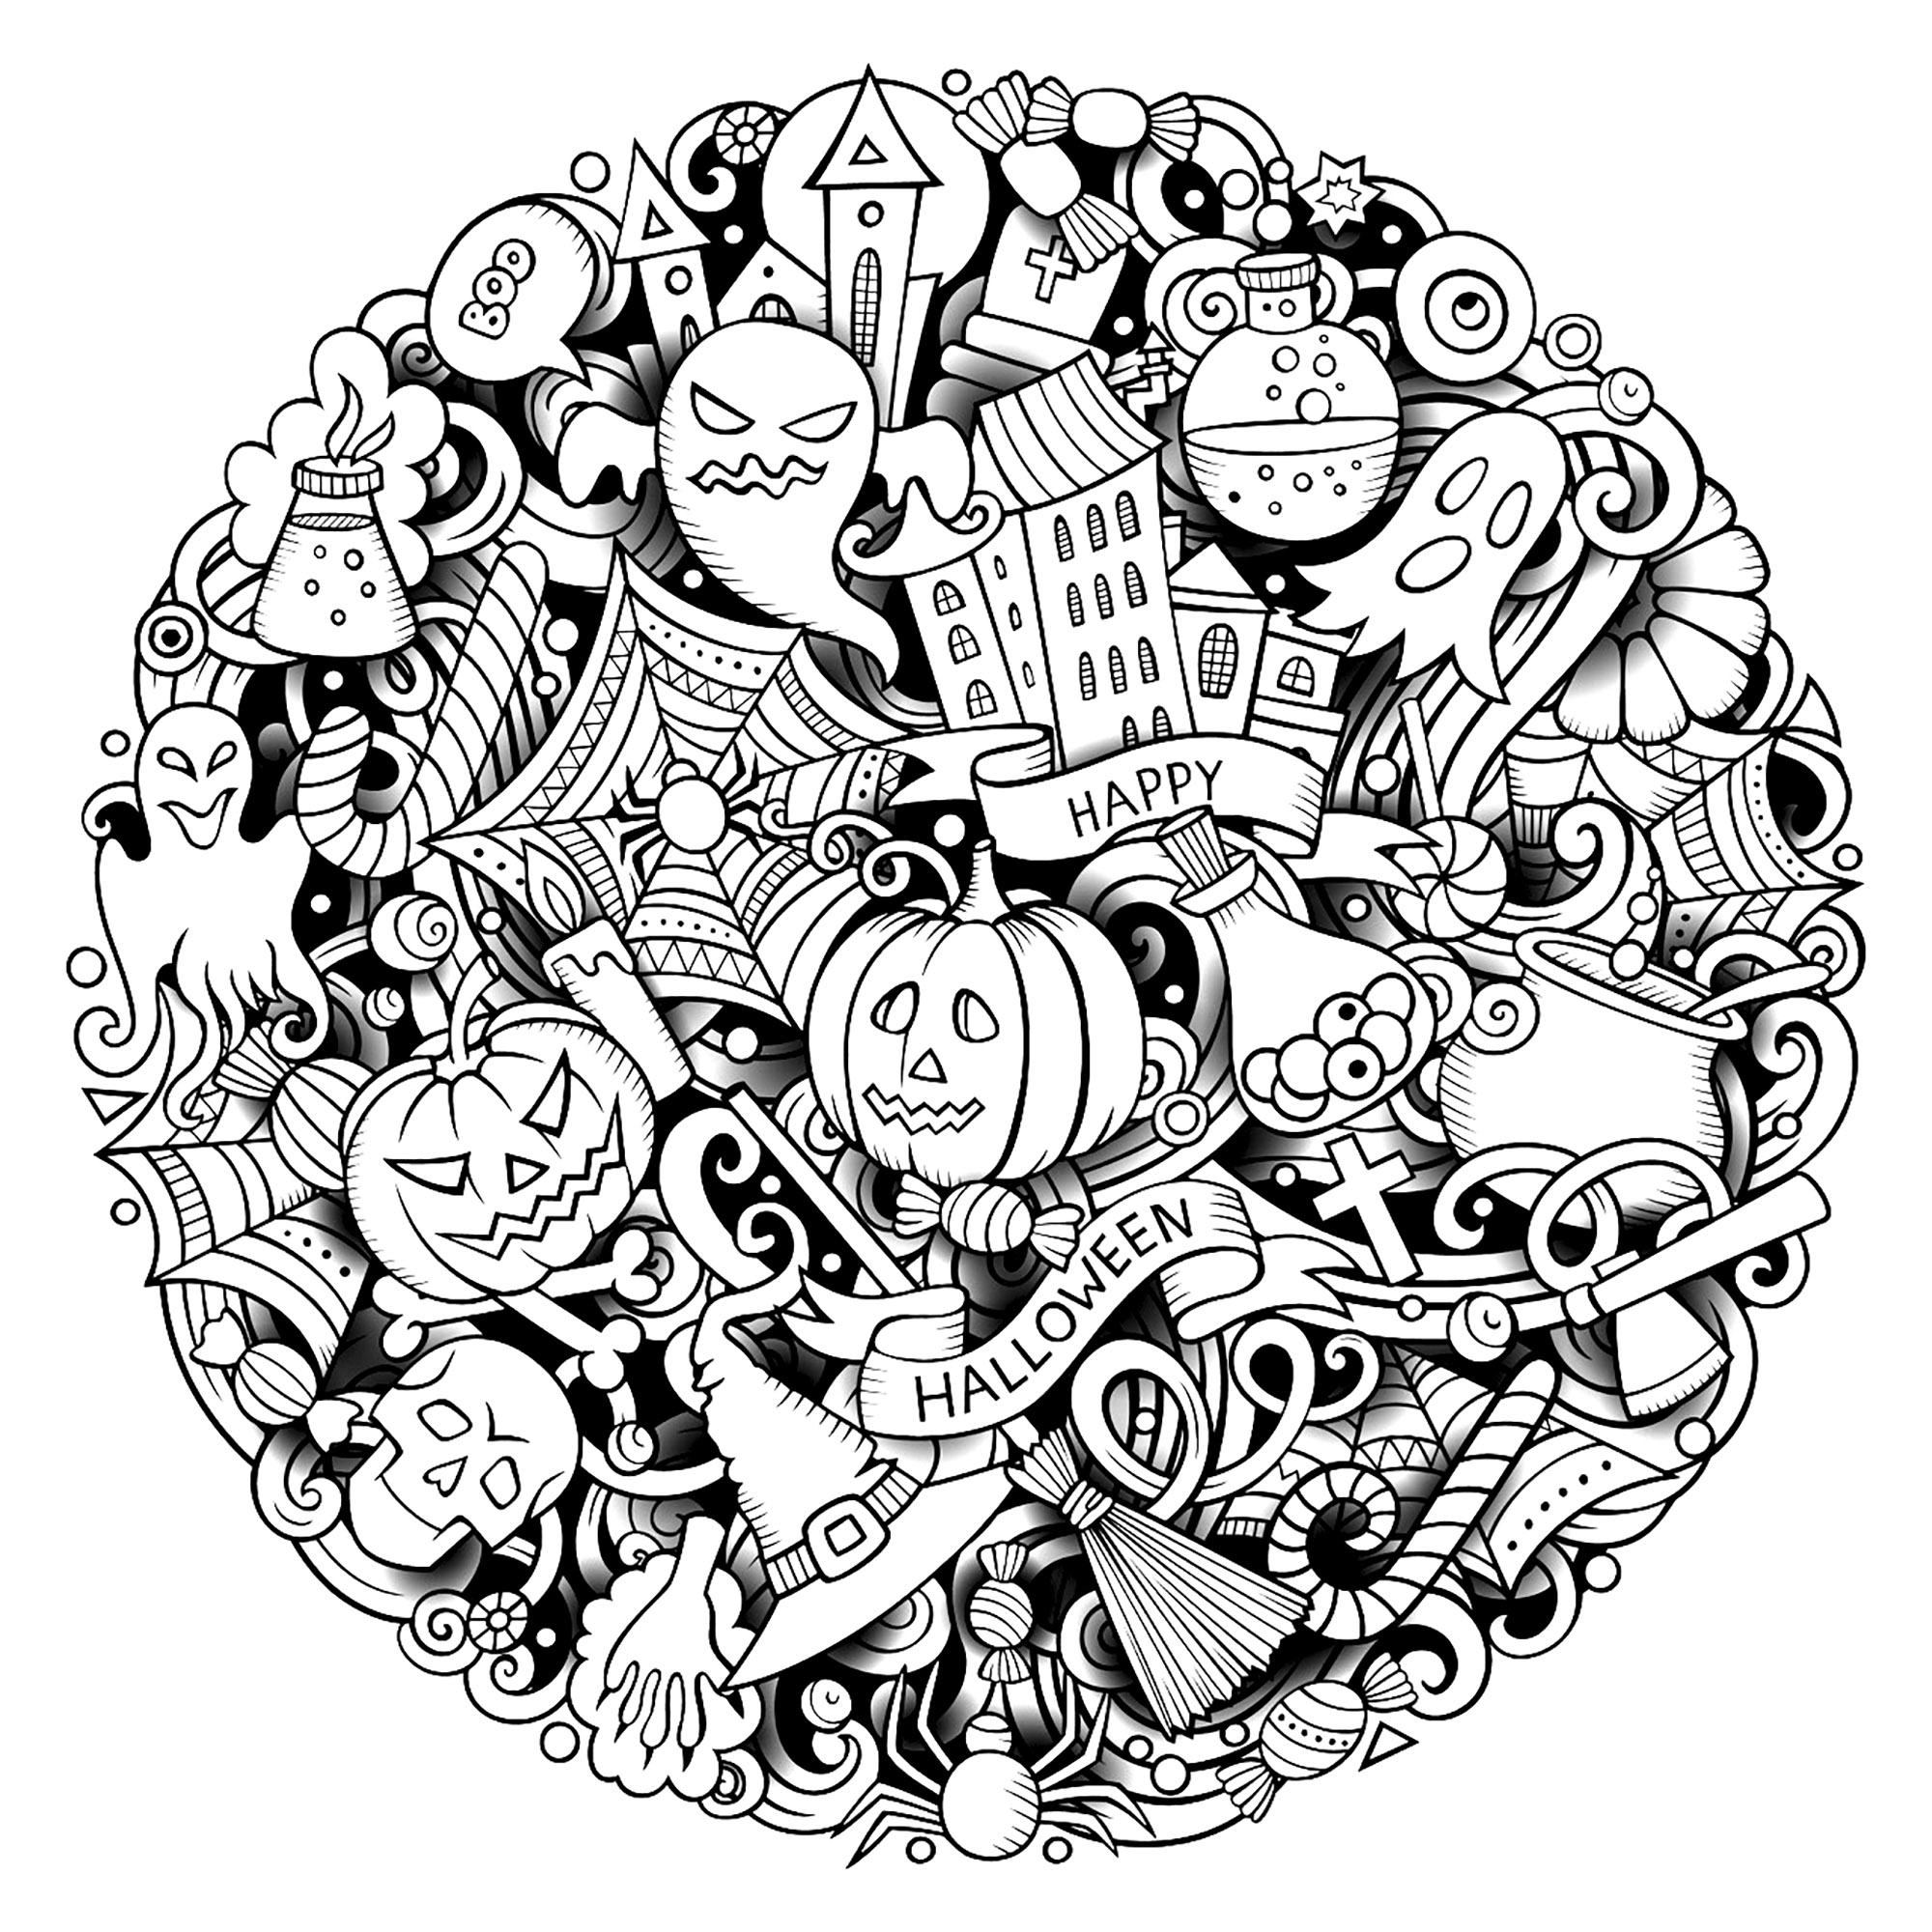 Un complejo garabato de Halloween. Diversos símbolos y personajes de Halloween en un garabato circular (calabazas, fantasmas, esqueletos, arañas, etc.), Origen : 123rf   Artista : Balabolka